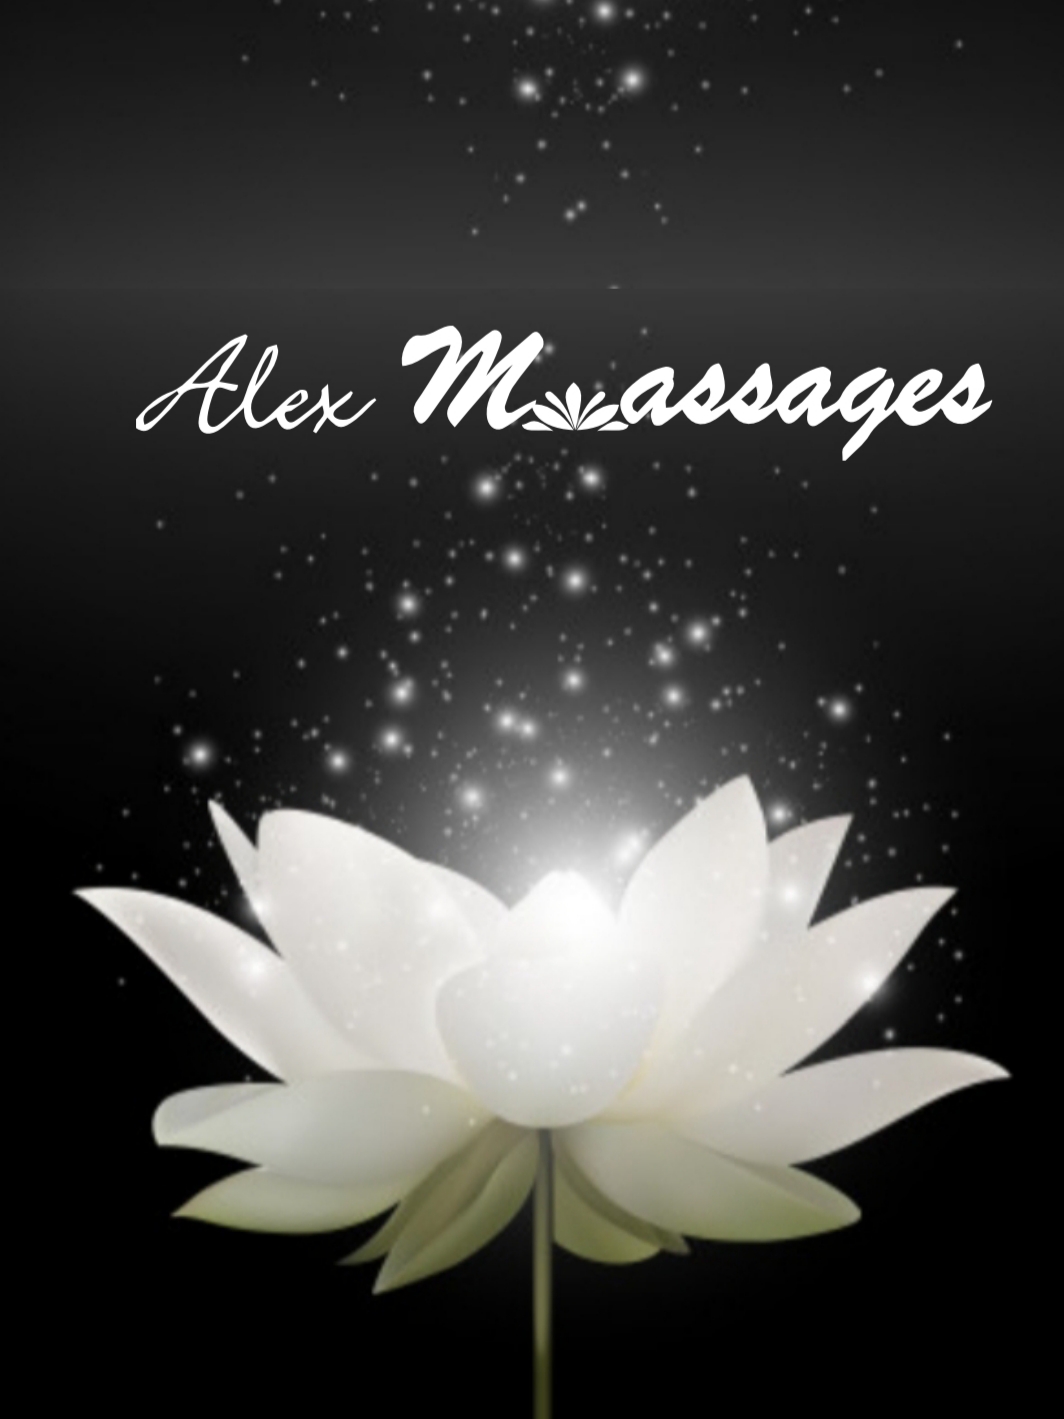 AlexMassages Logo.jpg